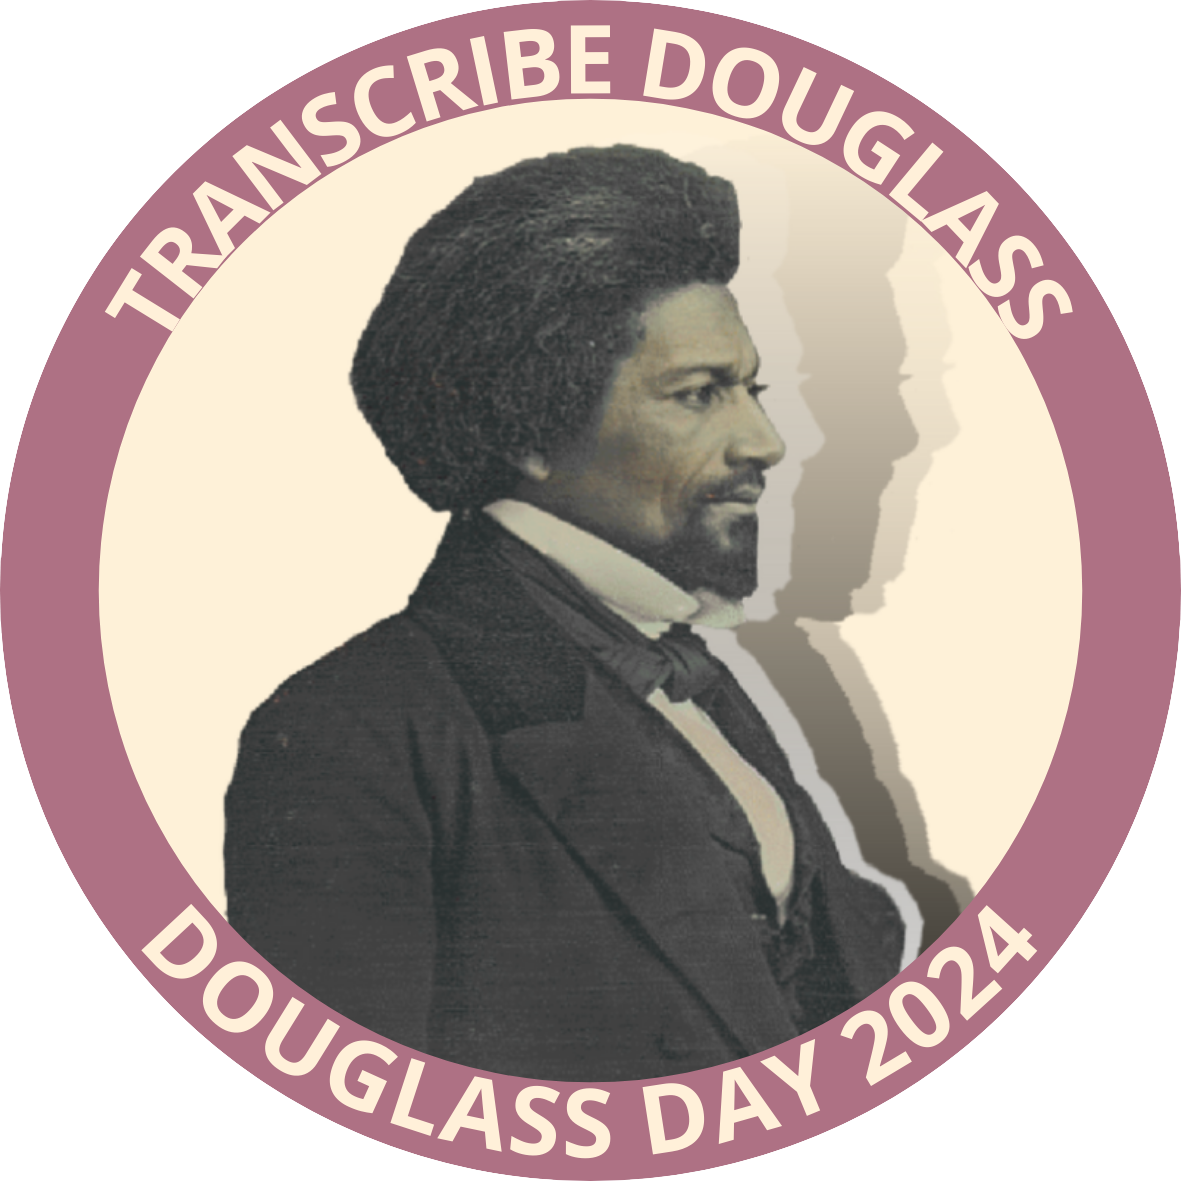 Transcribe Douglass sticker showing Douglass\' face in profile